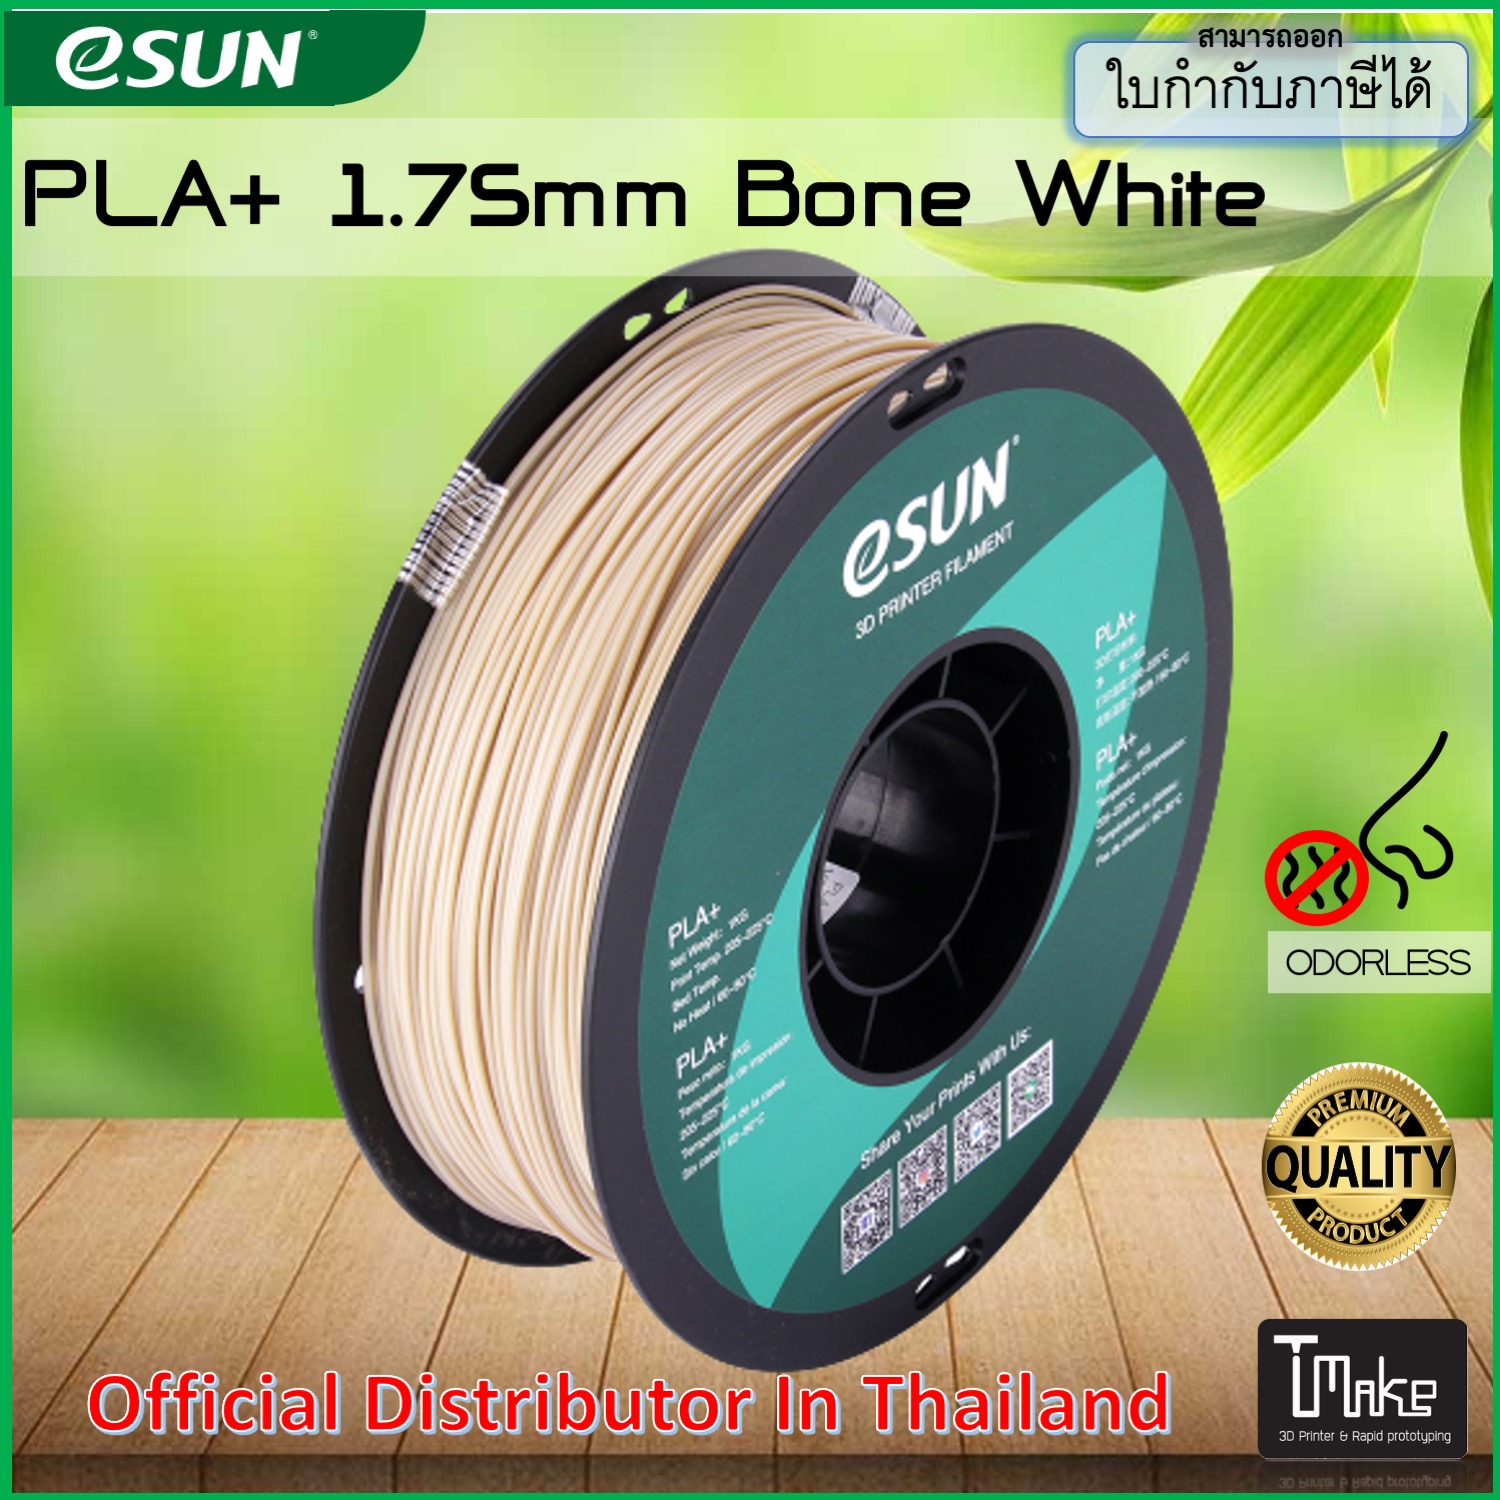 eSUN Filament PLA+ Bone White Size 1.75mm for 3D Printer